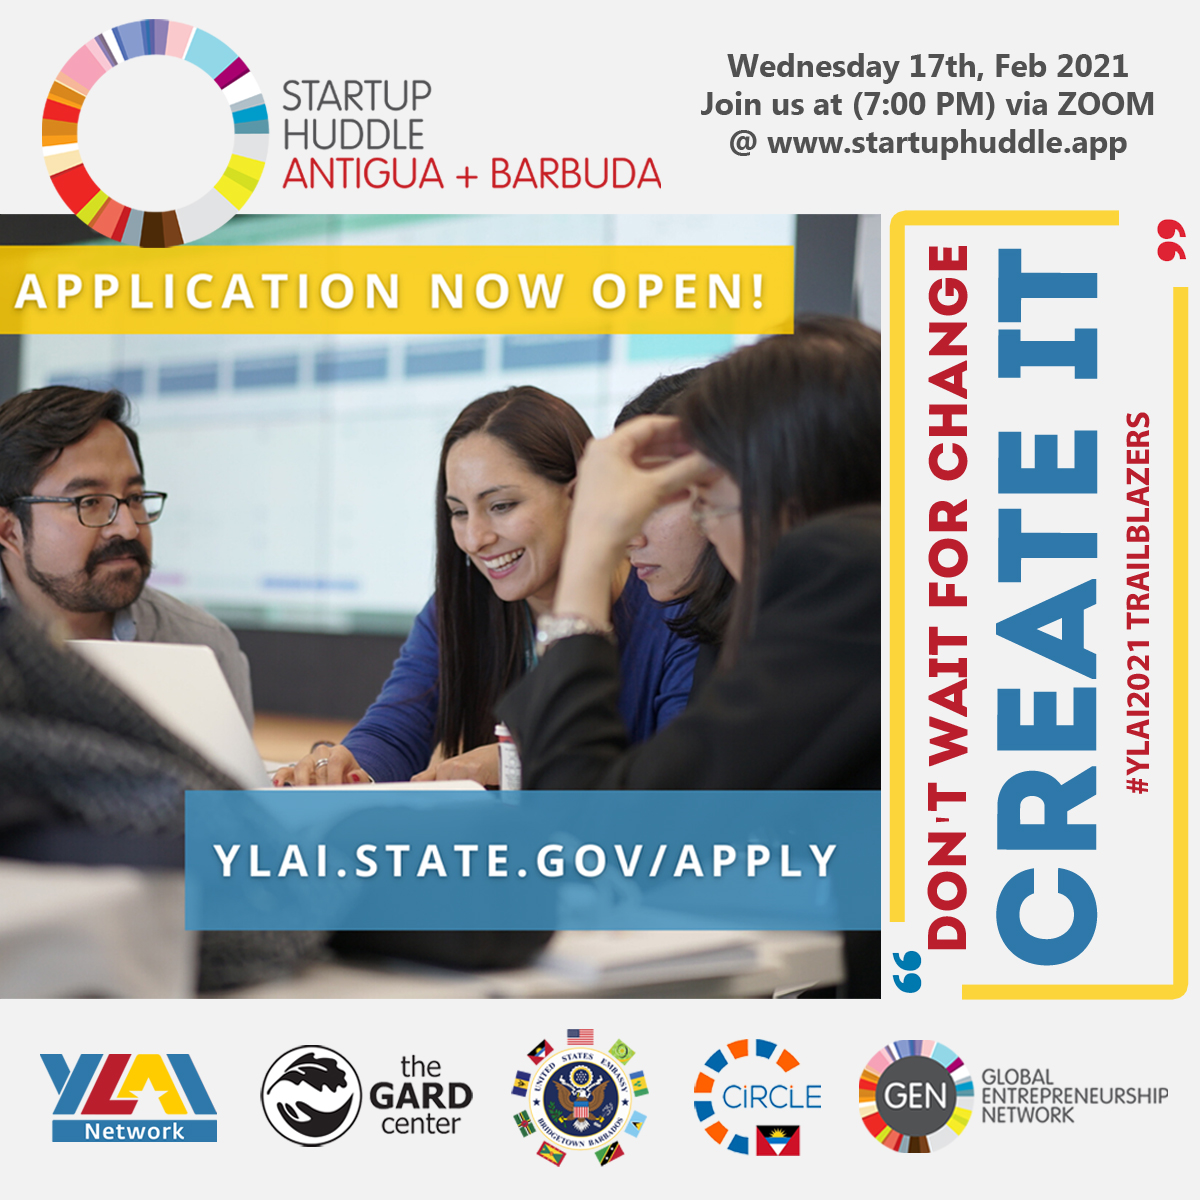 Startup Huddle invites entrepreneurs to apply for YLAI 2021 Fellowship